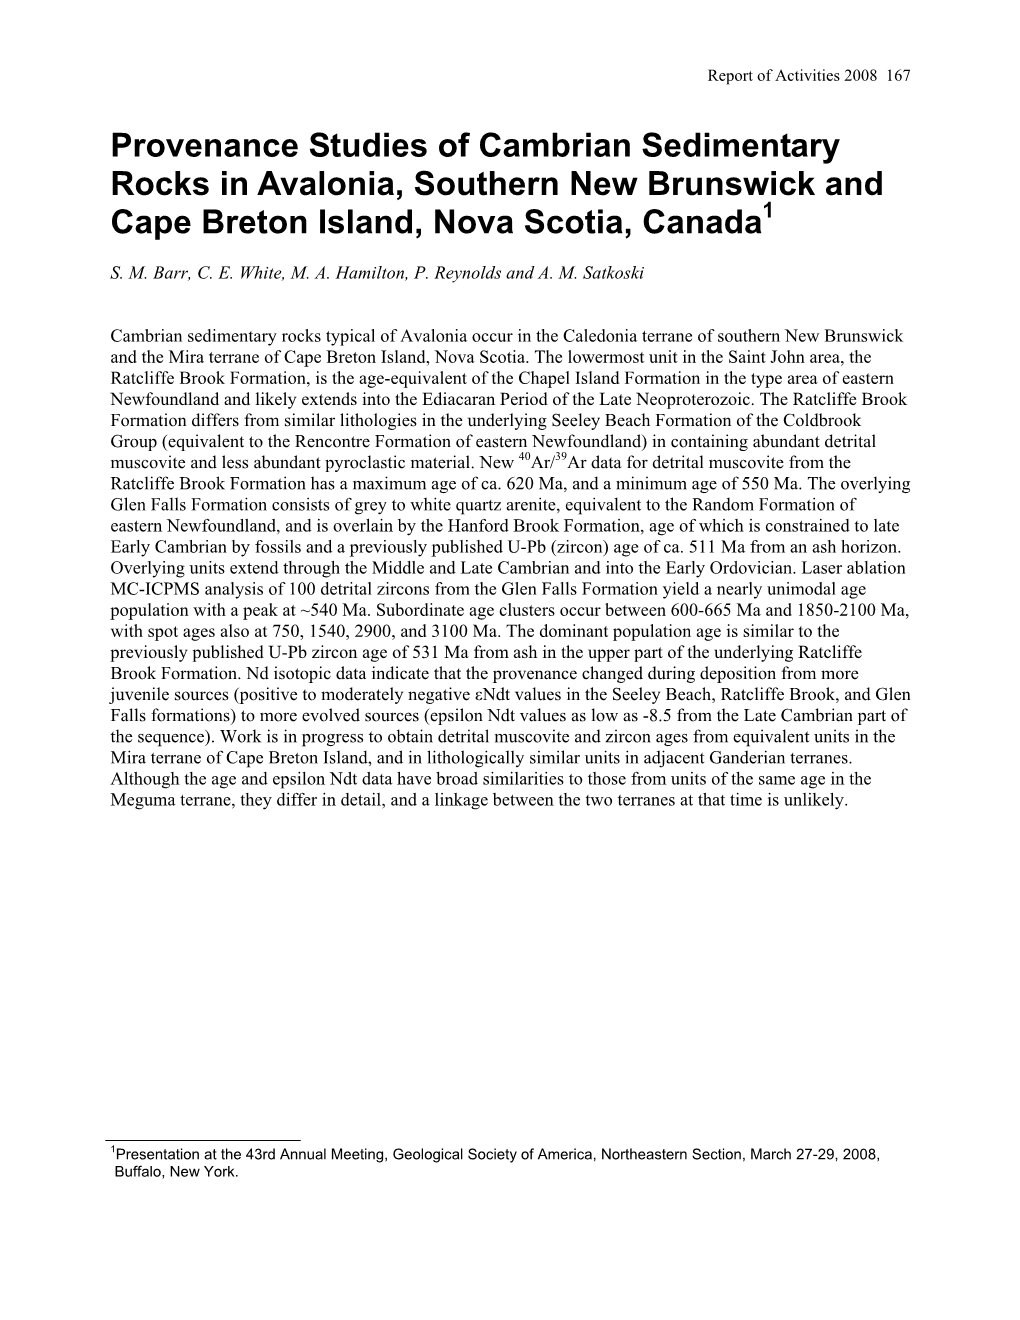 Provenance Studies of Cambrian Sedimentary Rocks in Avalonia, Southern New Brunswick and Cape Breton Island, Nova Scotia, Canada1